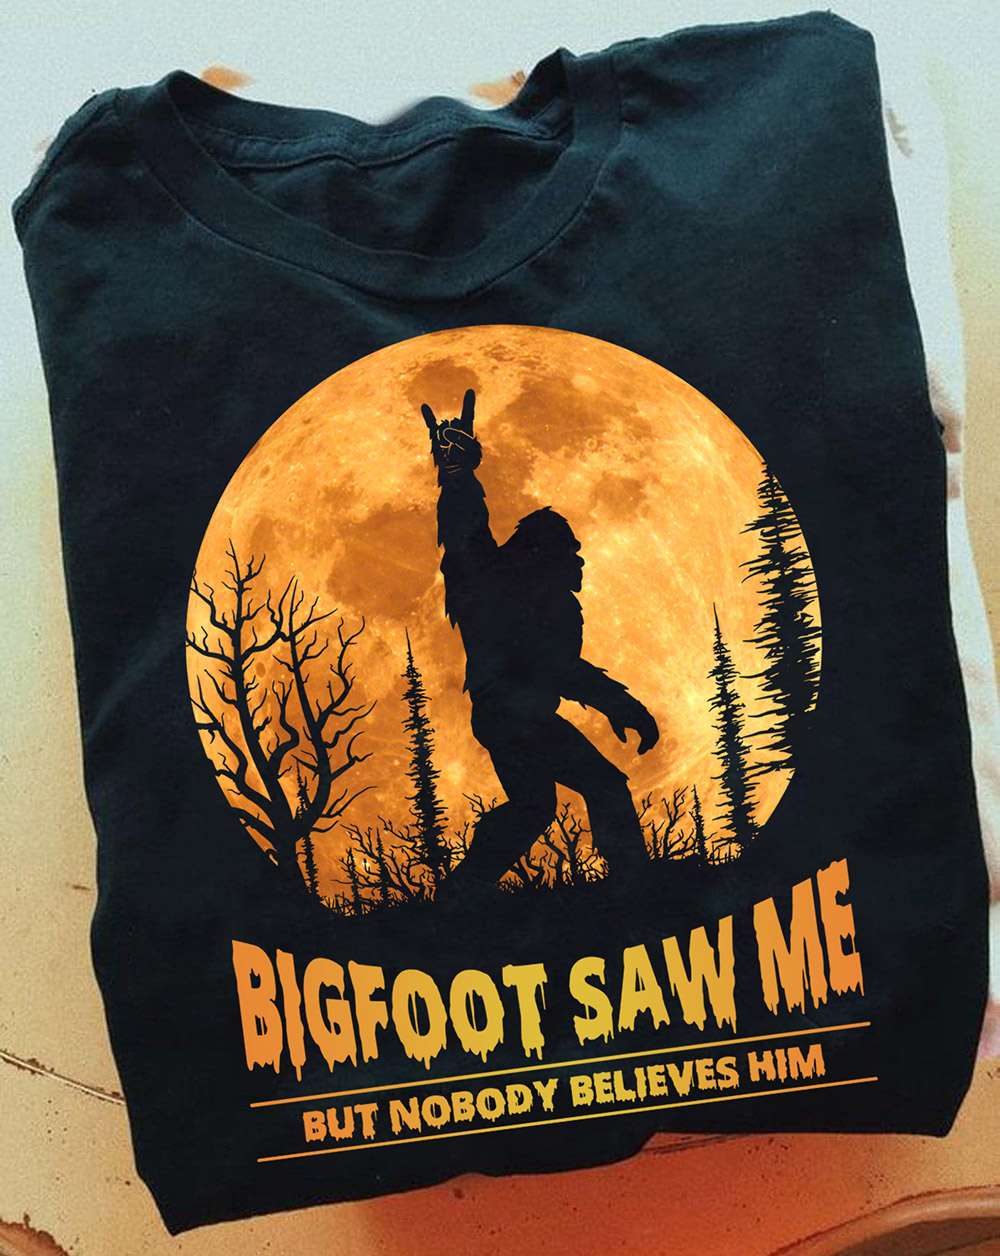 Bigfoot saw me but nobody believes him – Bigfoot the moon